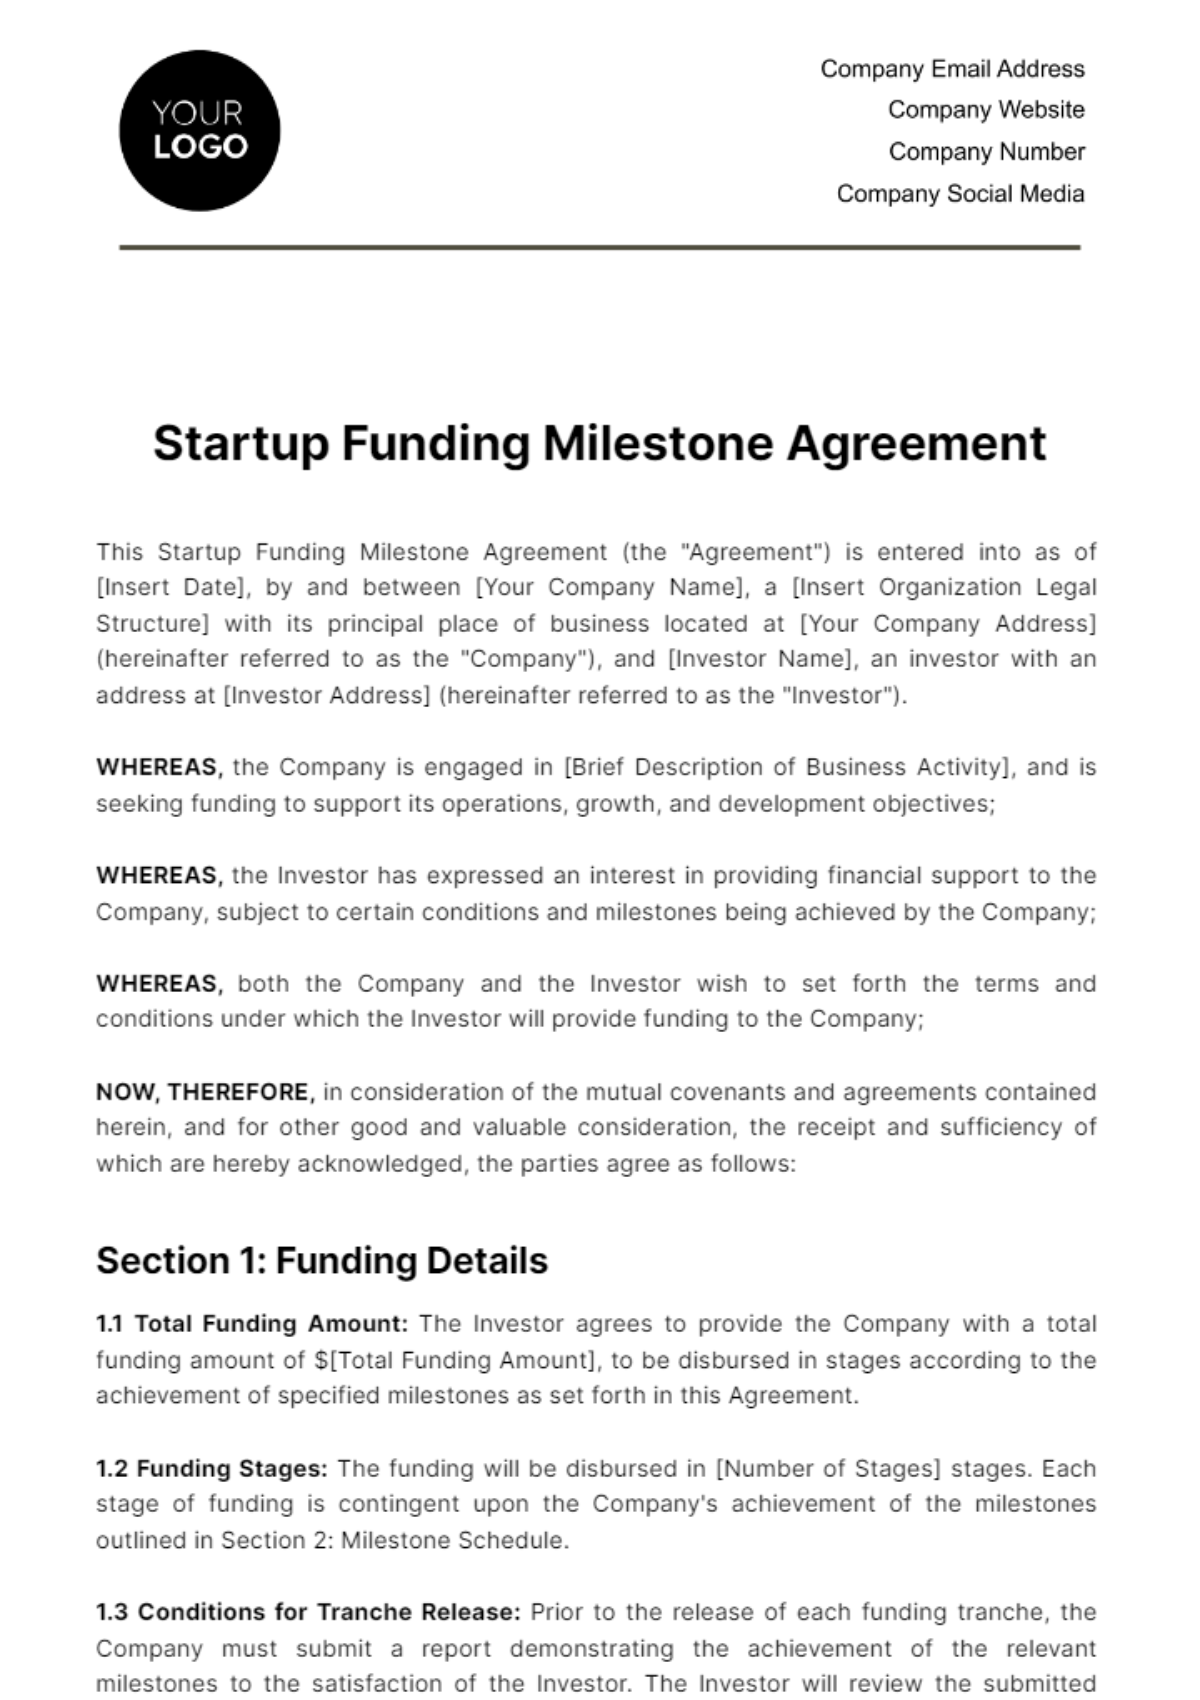 Startup Funding Milestone Agreement Template